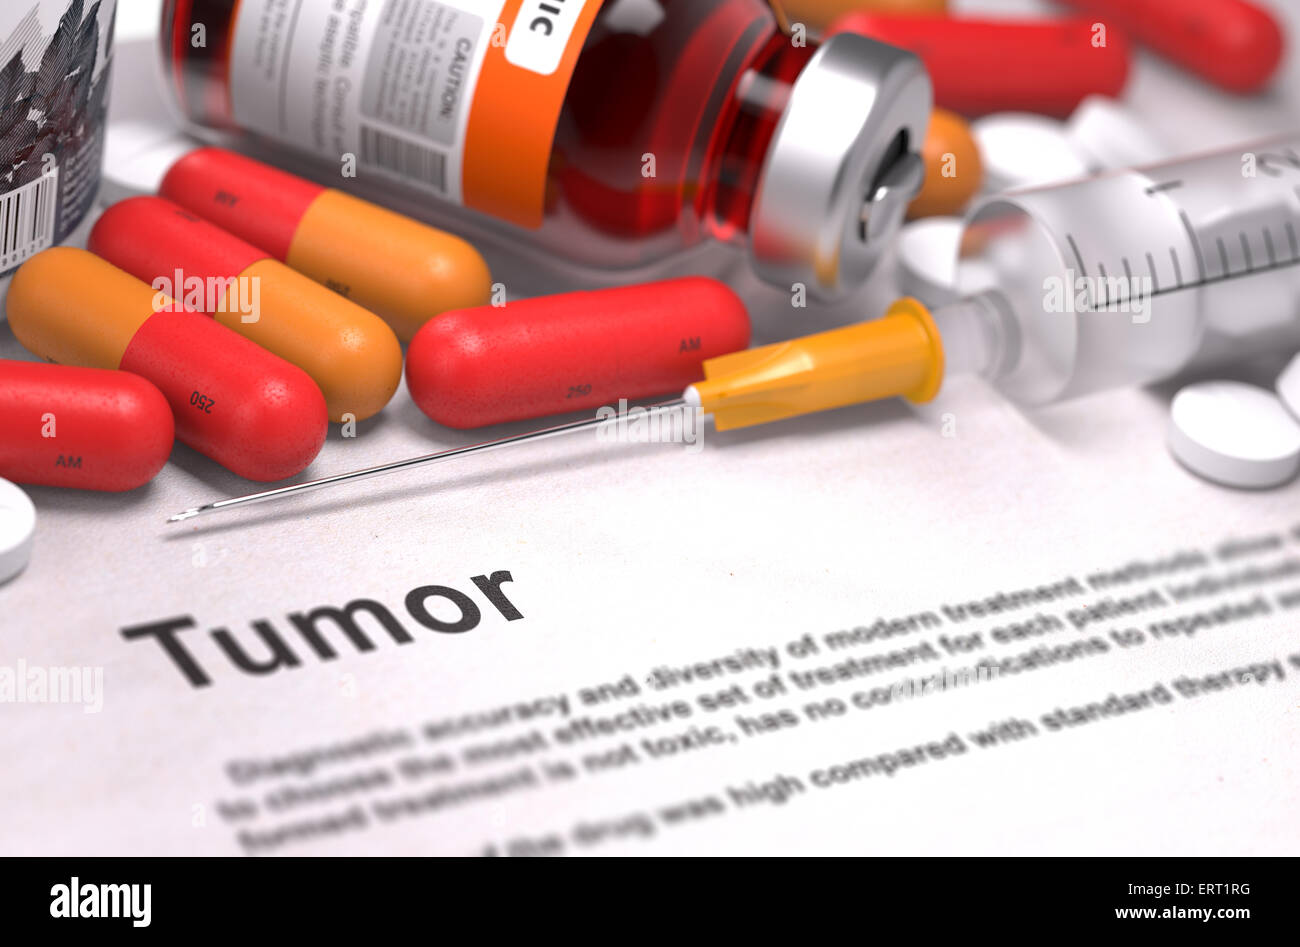 Diagnosis - Tumor. Medical Concept. 3D Render. Stock Photo